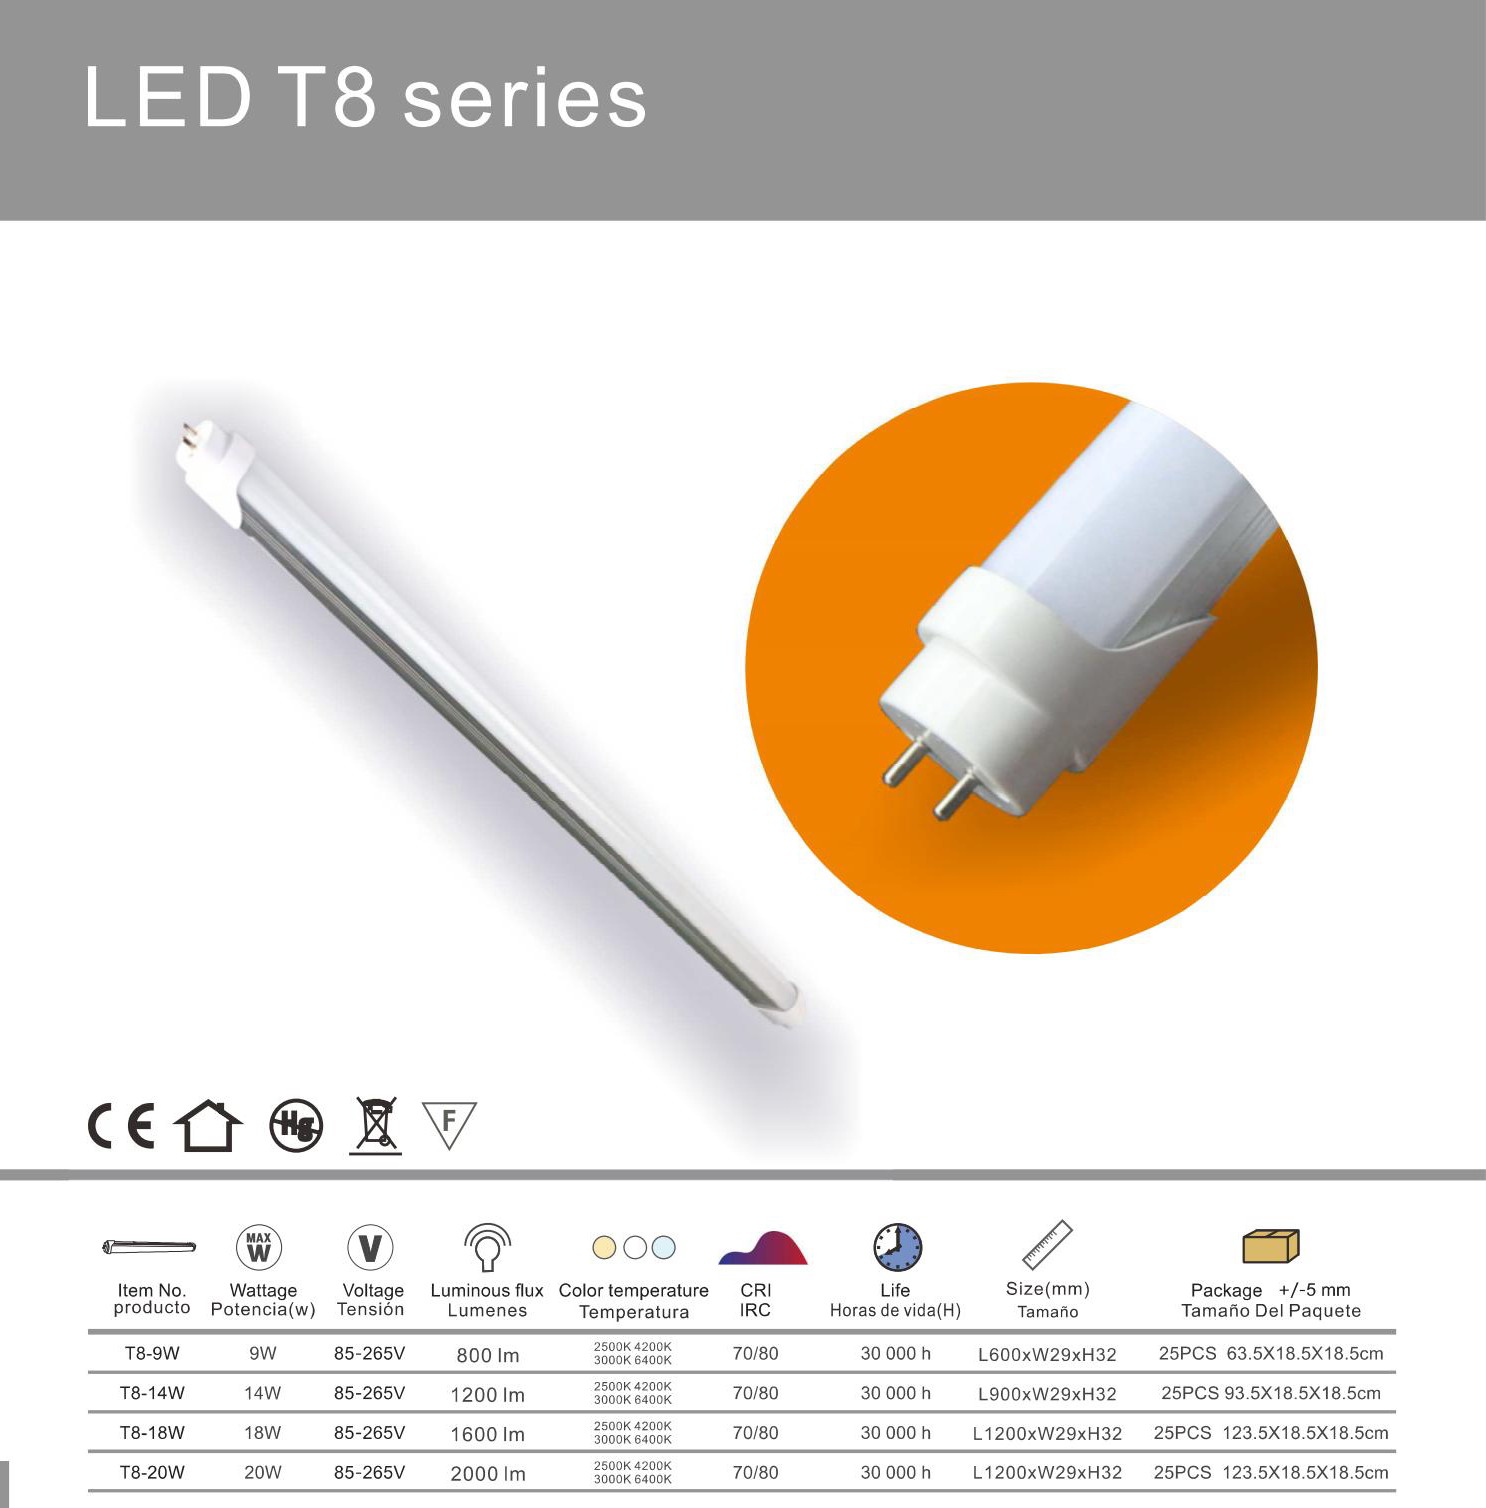 LED T8 series